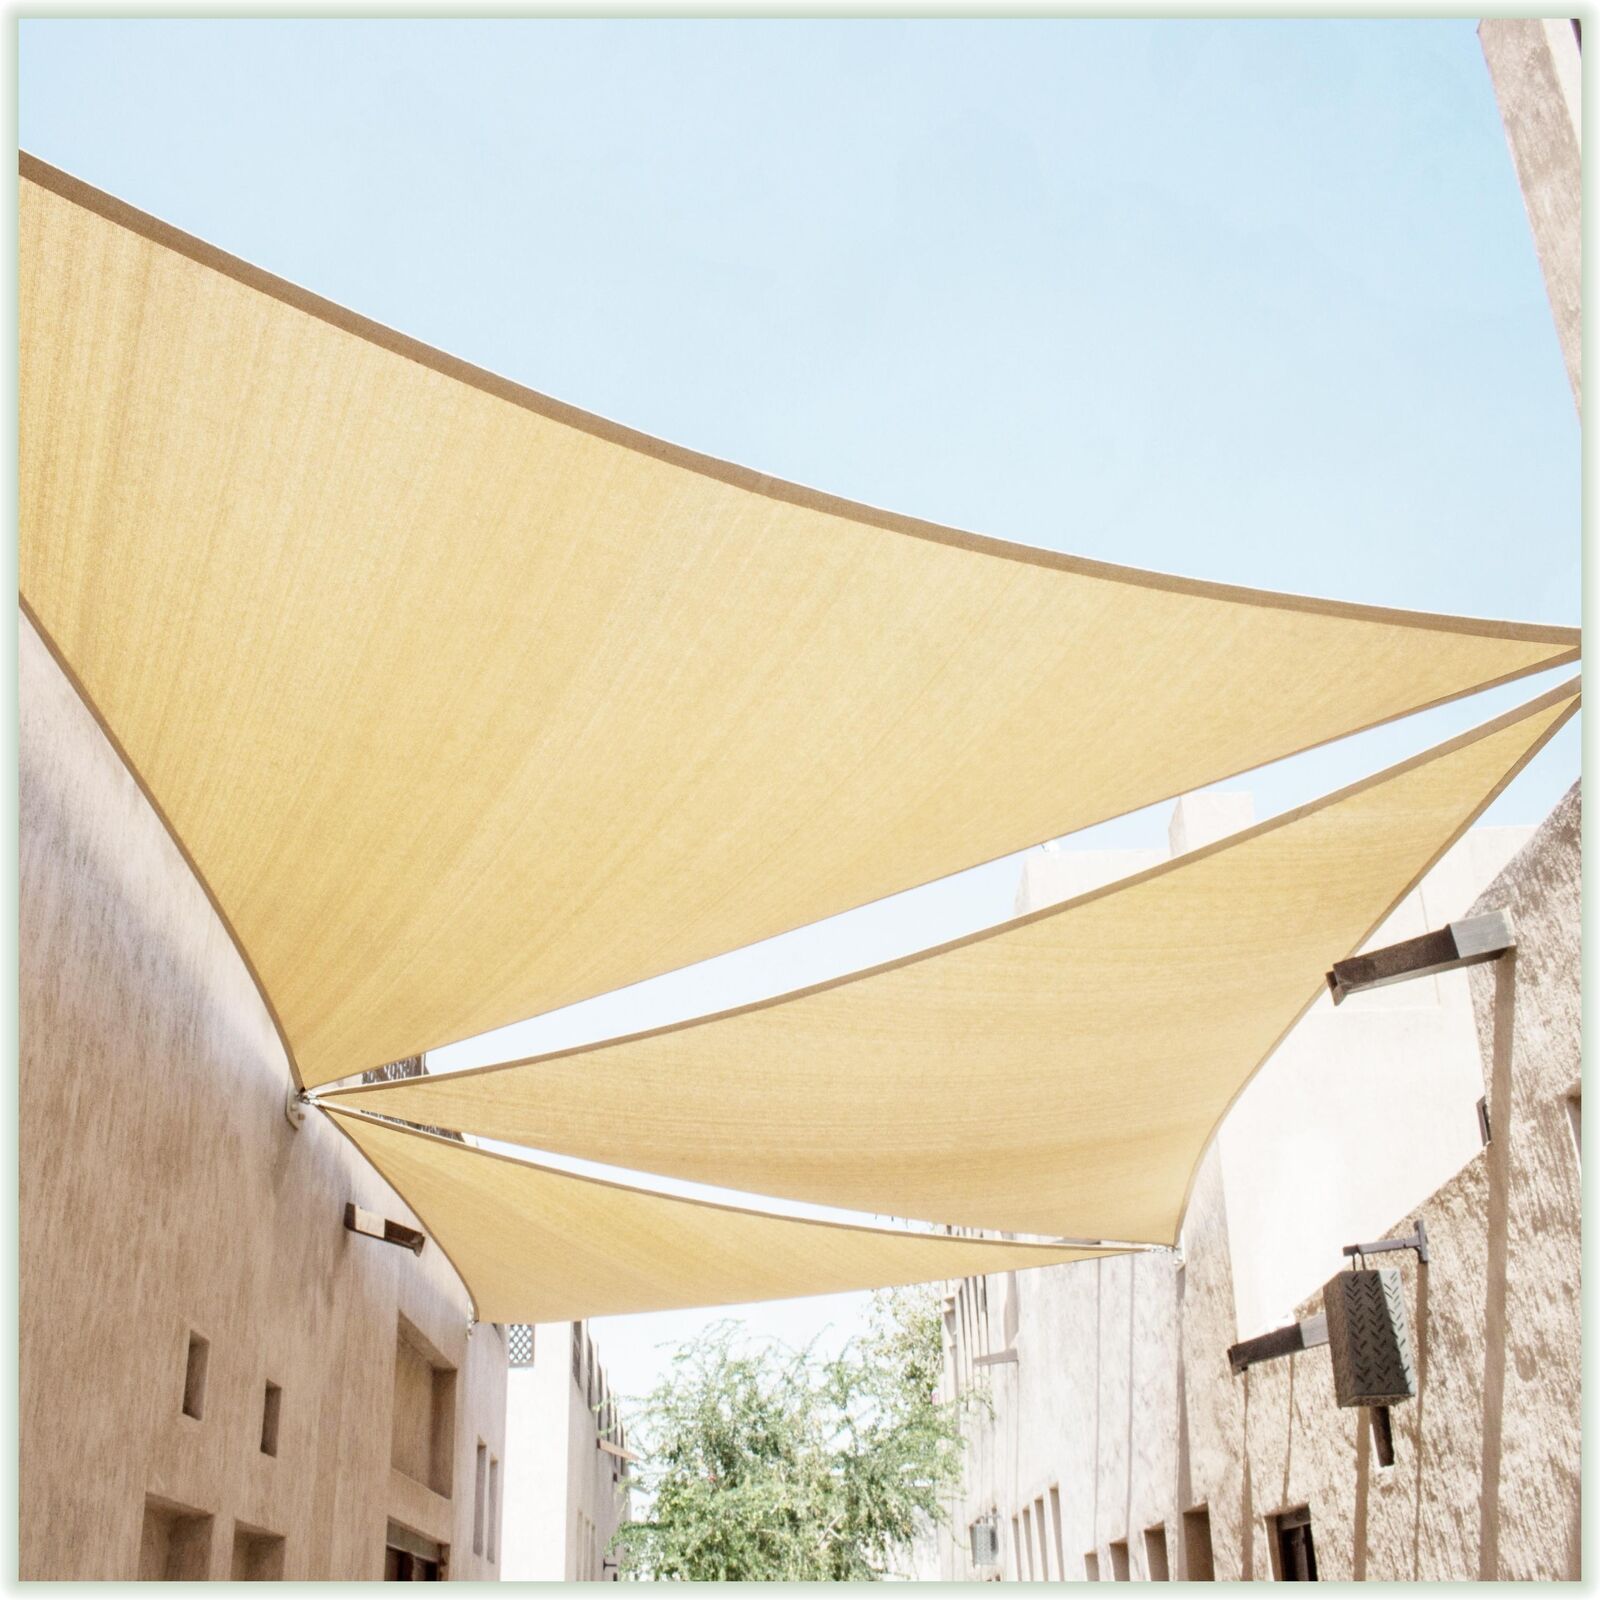 ColourTree Triangle Right Angle Sun Shade Sail Canopy Fabric Outdoor Patio